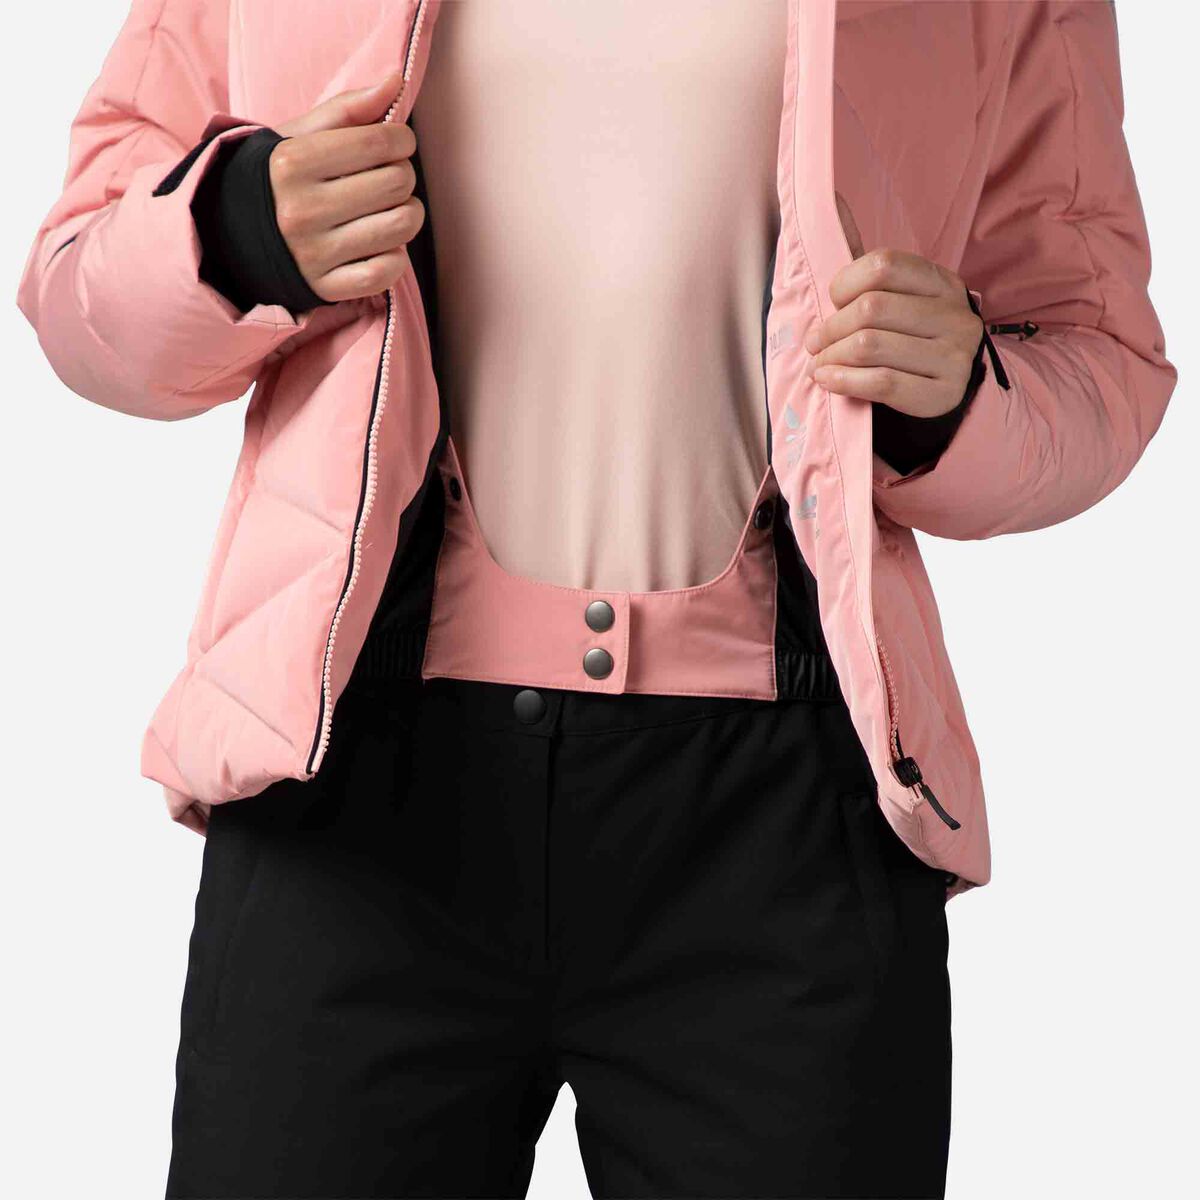 Rossignol Women's Staci Ski Jacket pinkpurple